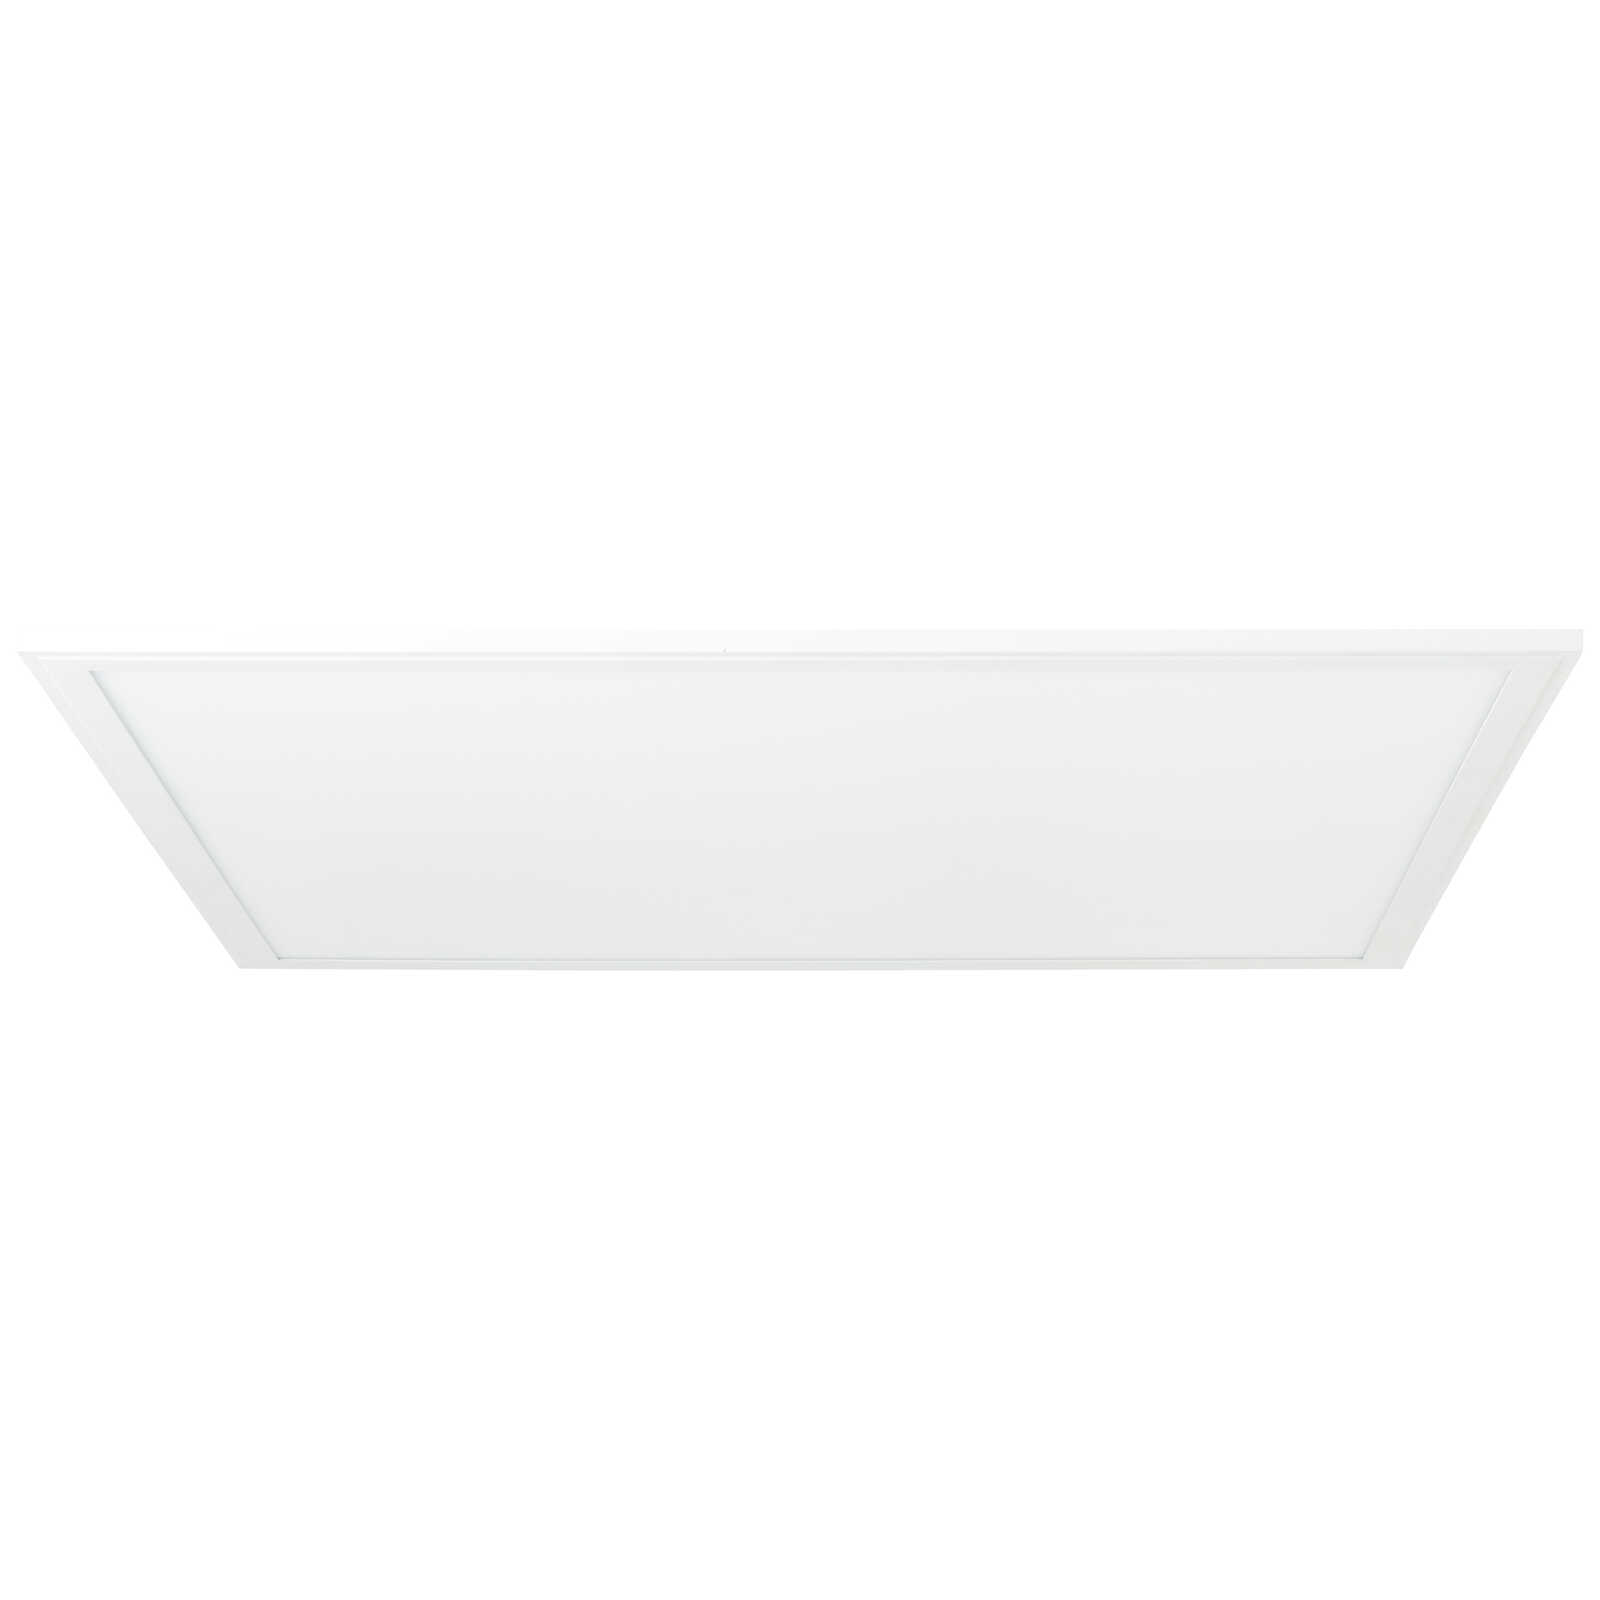             Plastic ceiling light - Aaron 4 - White
        